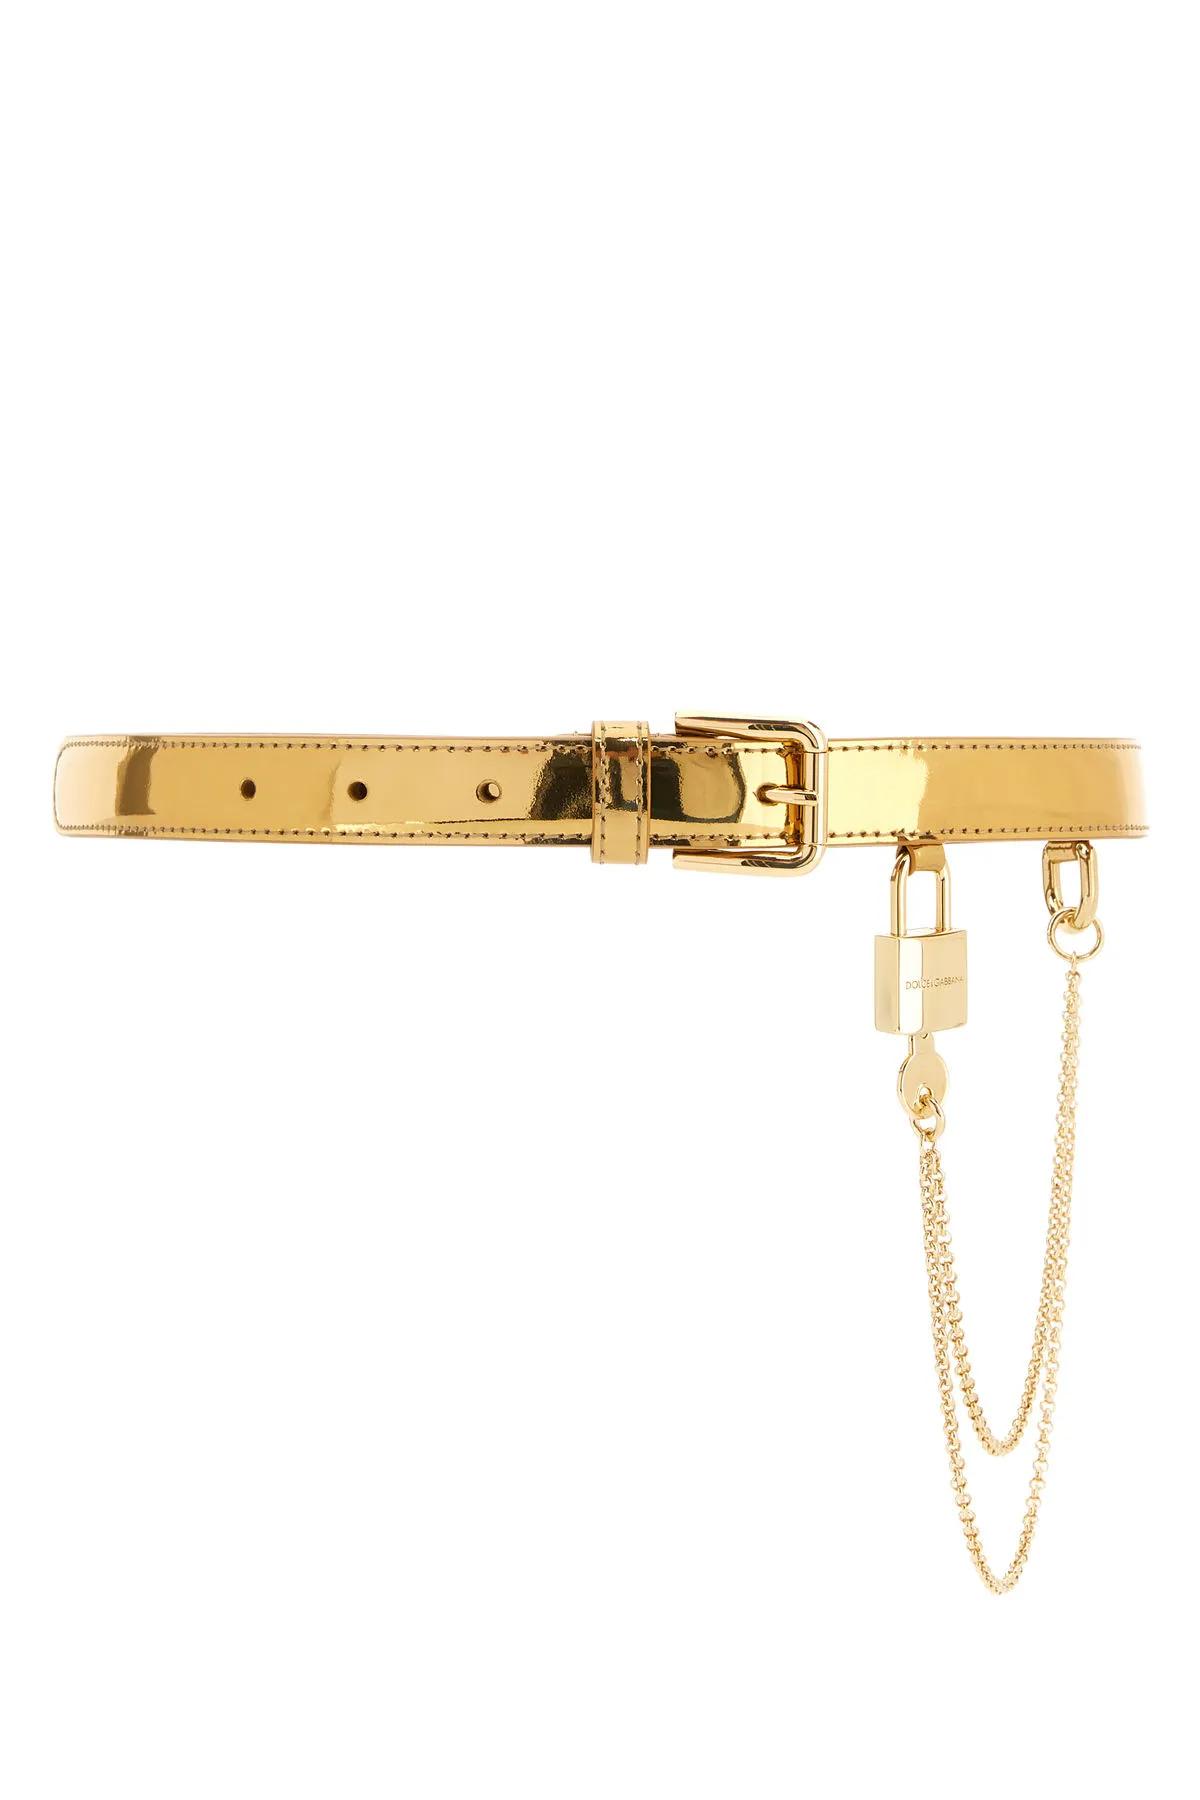 Dolce & Gabbana Golden Leather Belt